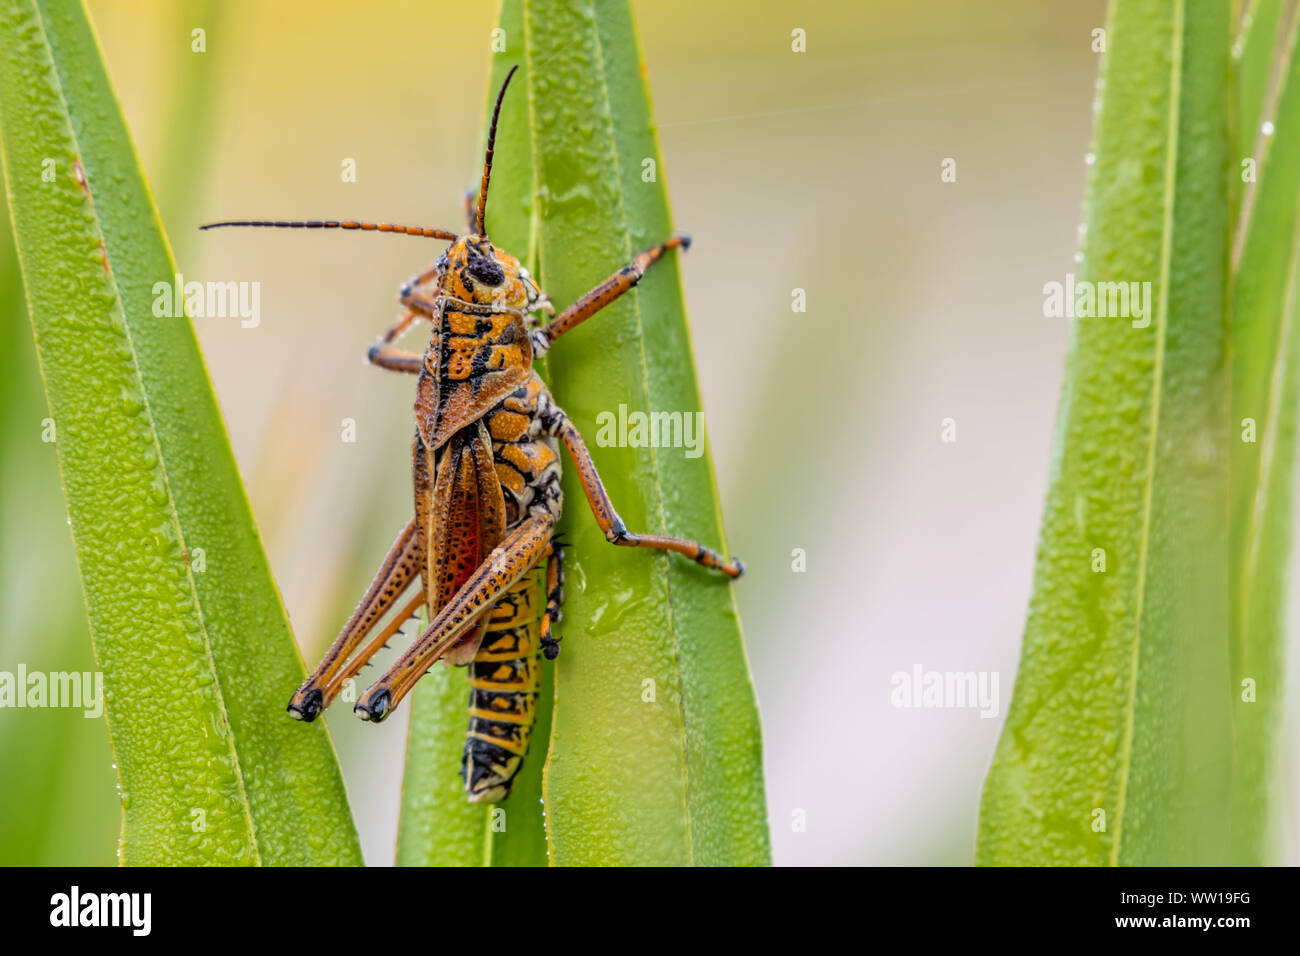 Orange lubber grasshopper on plant blades Stock Photo